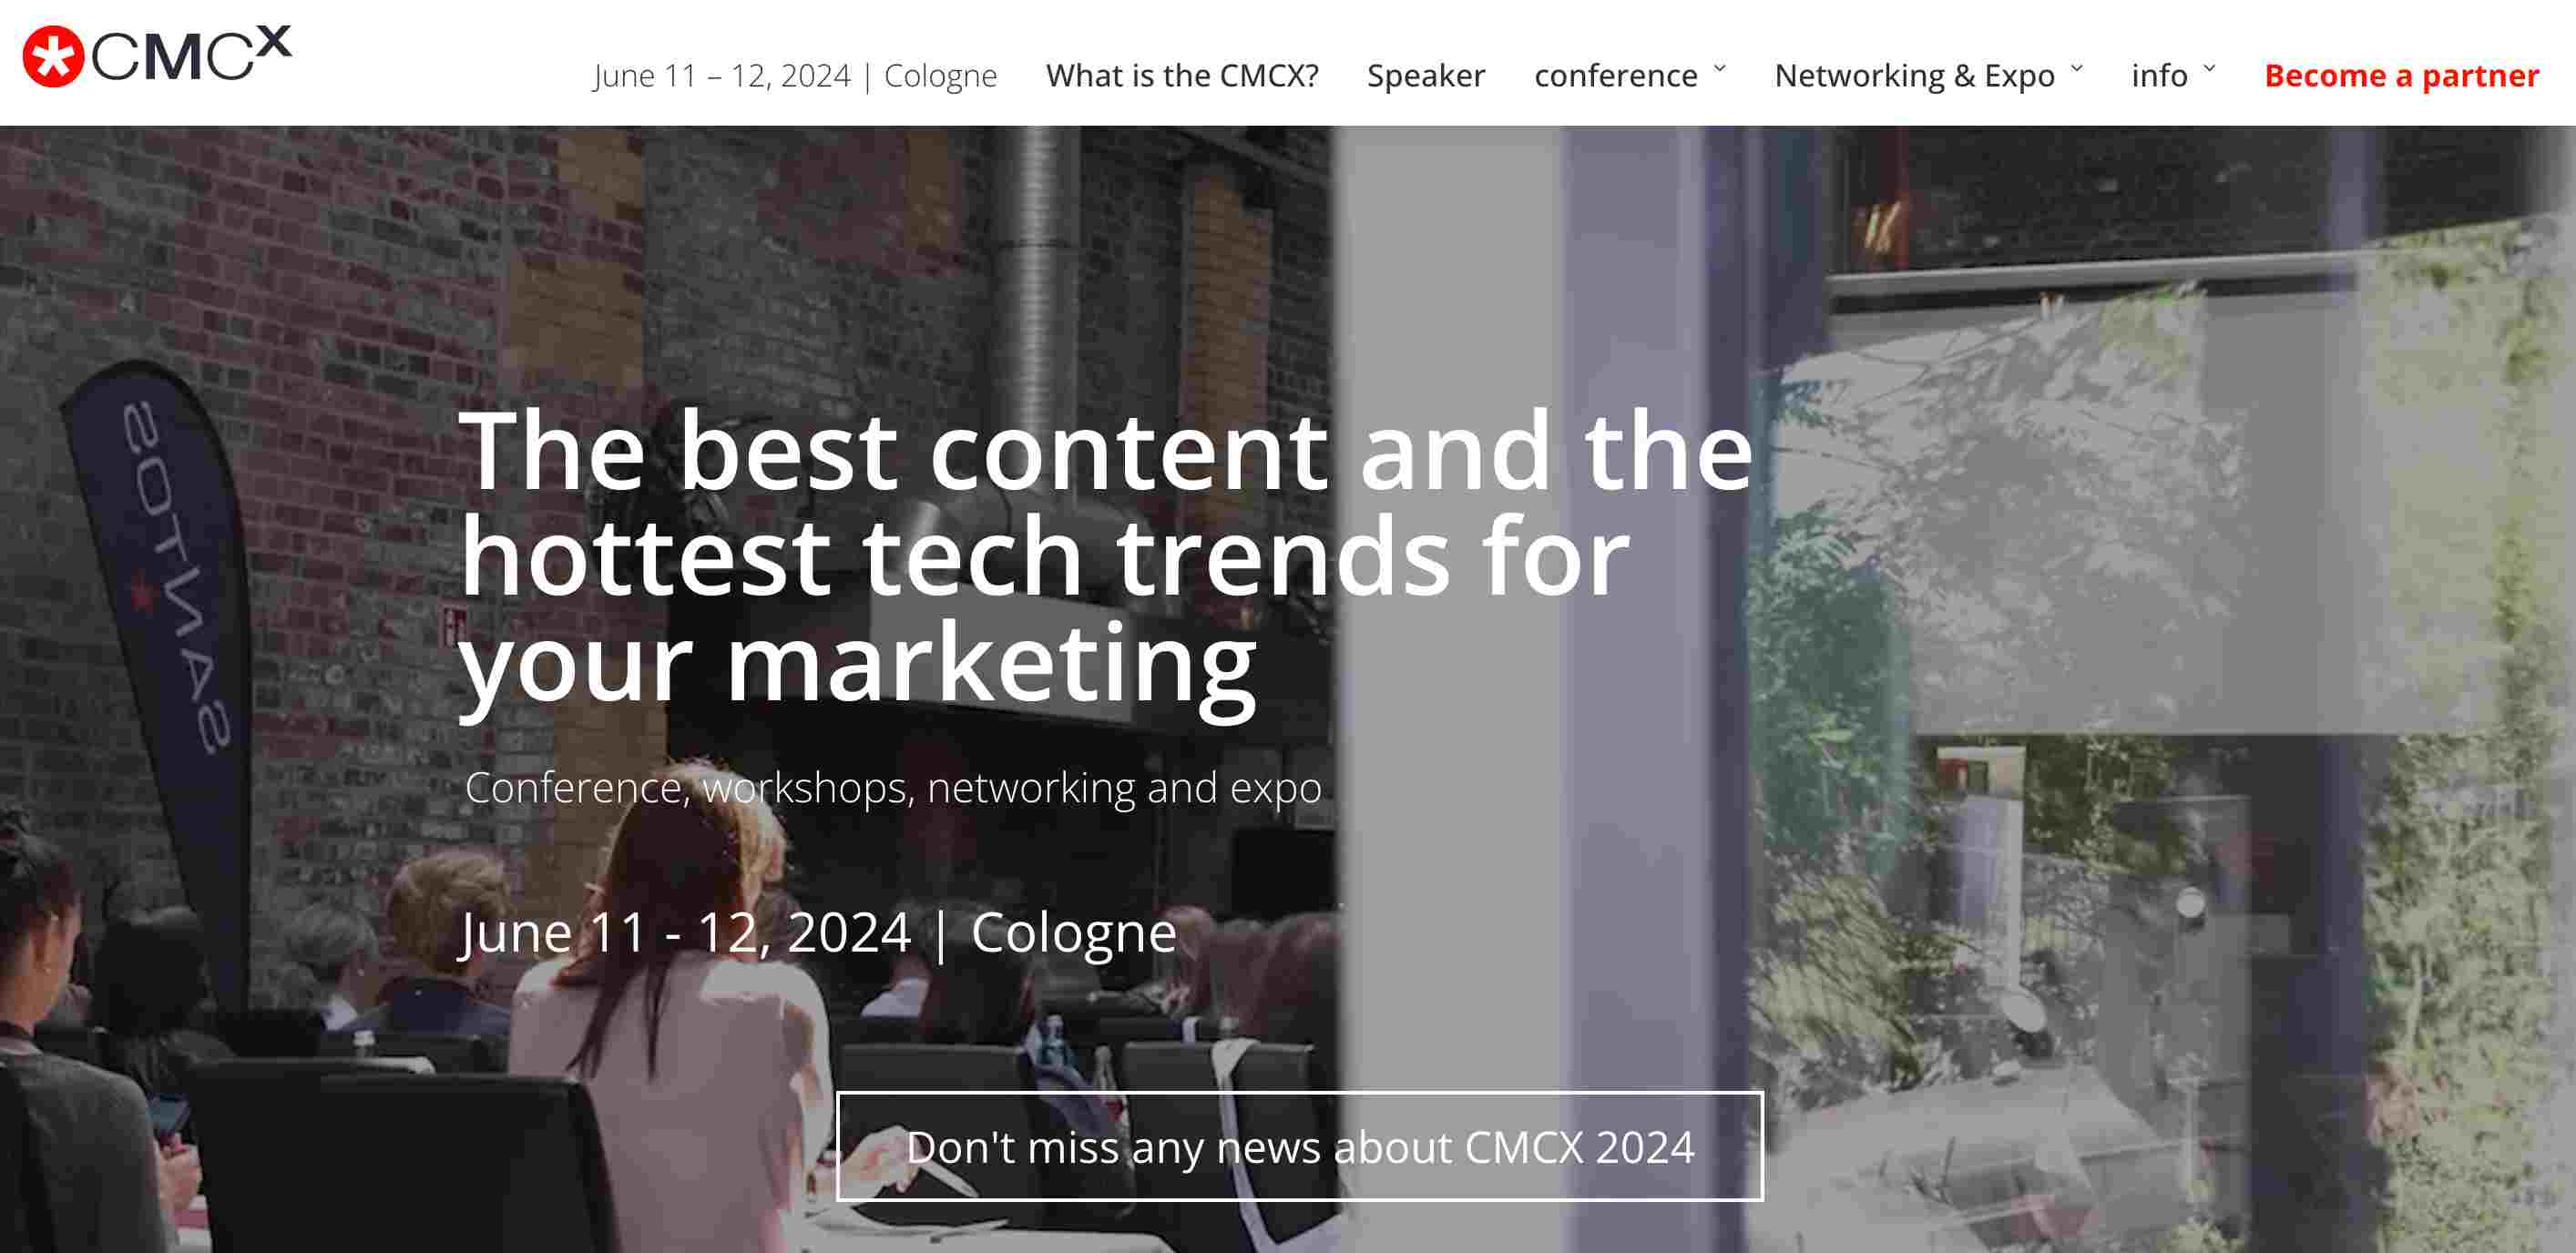 Digital marketing conference: CMCX